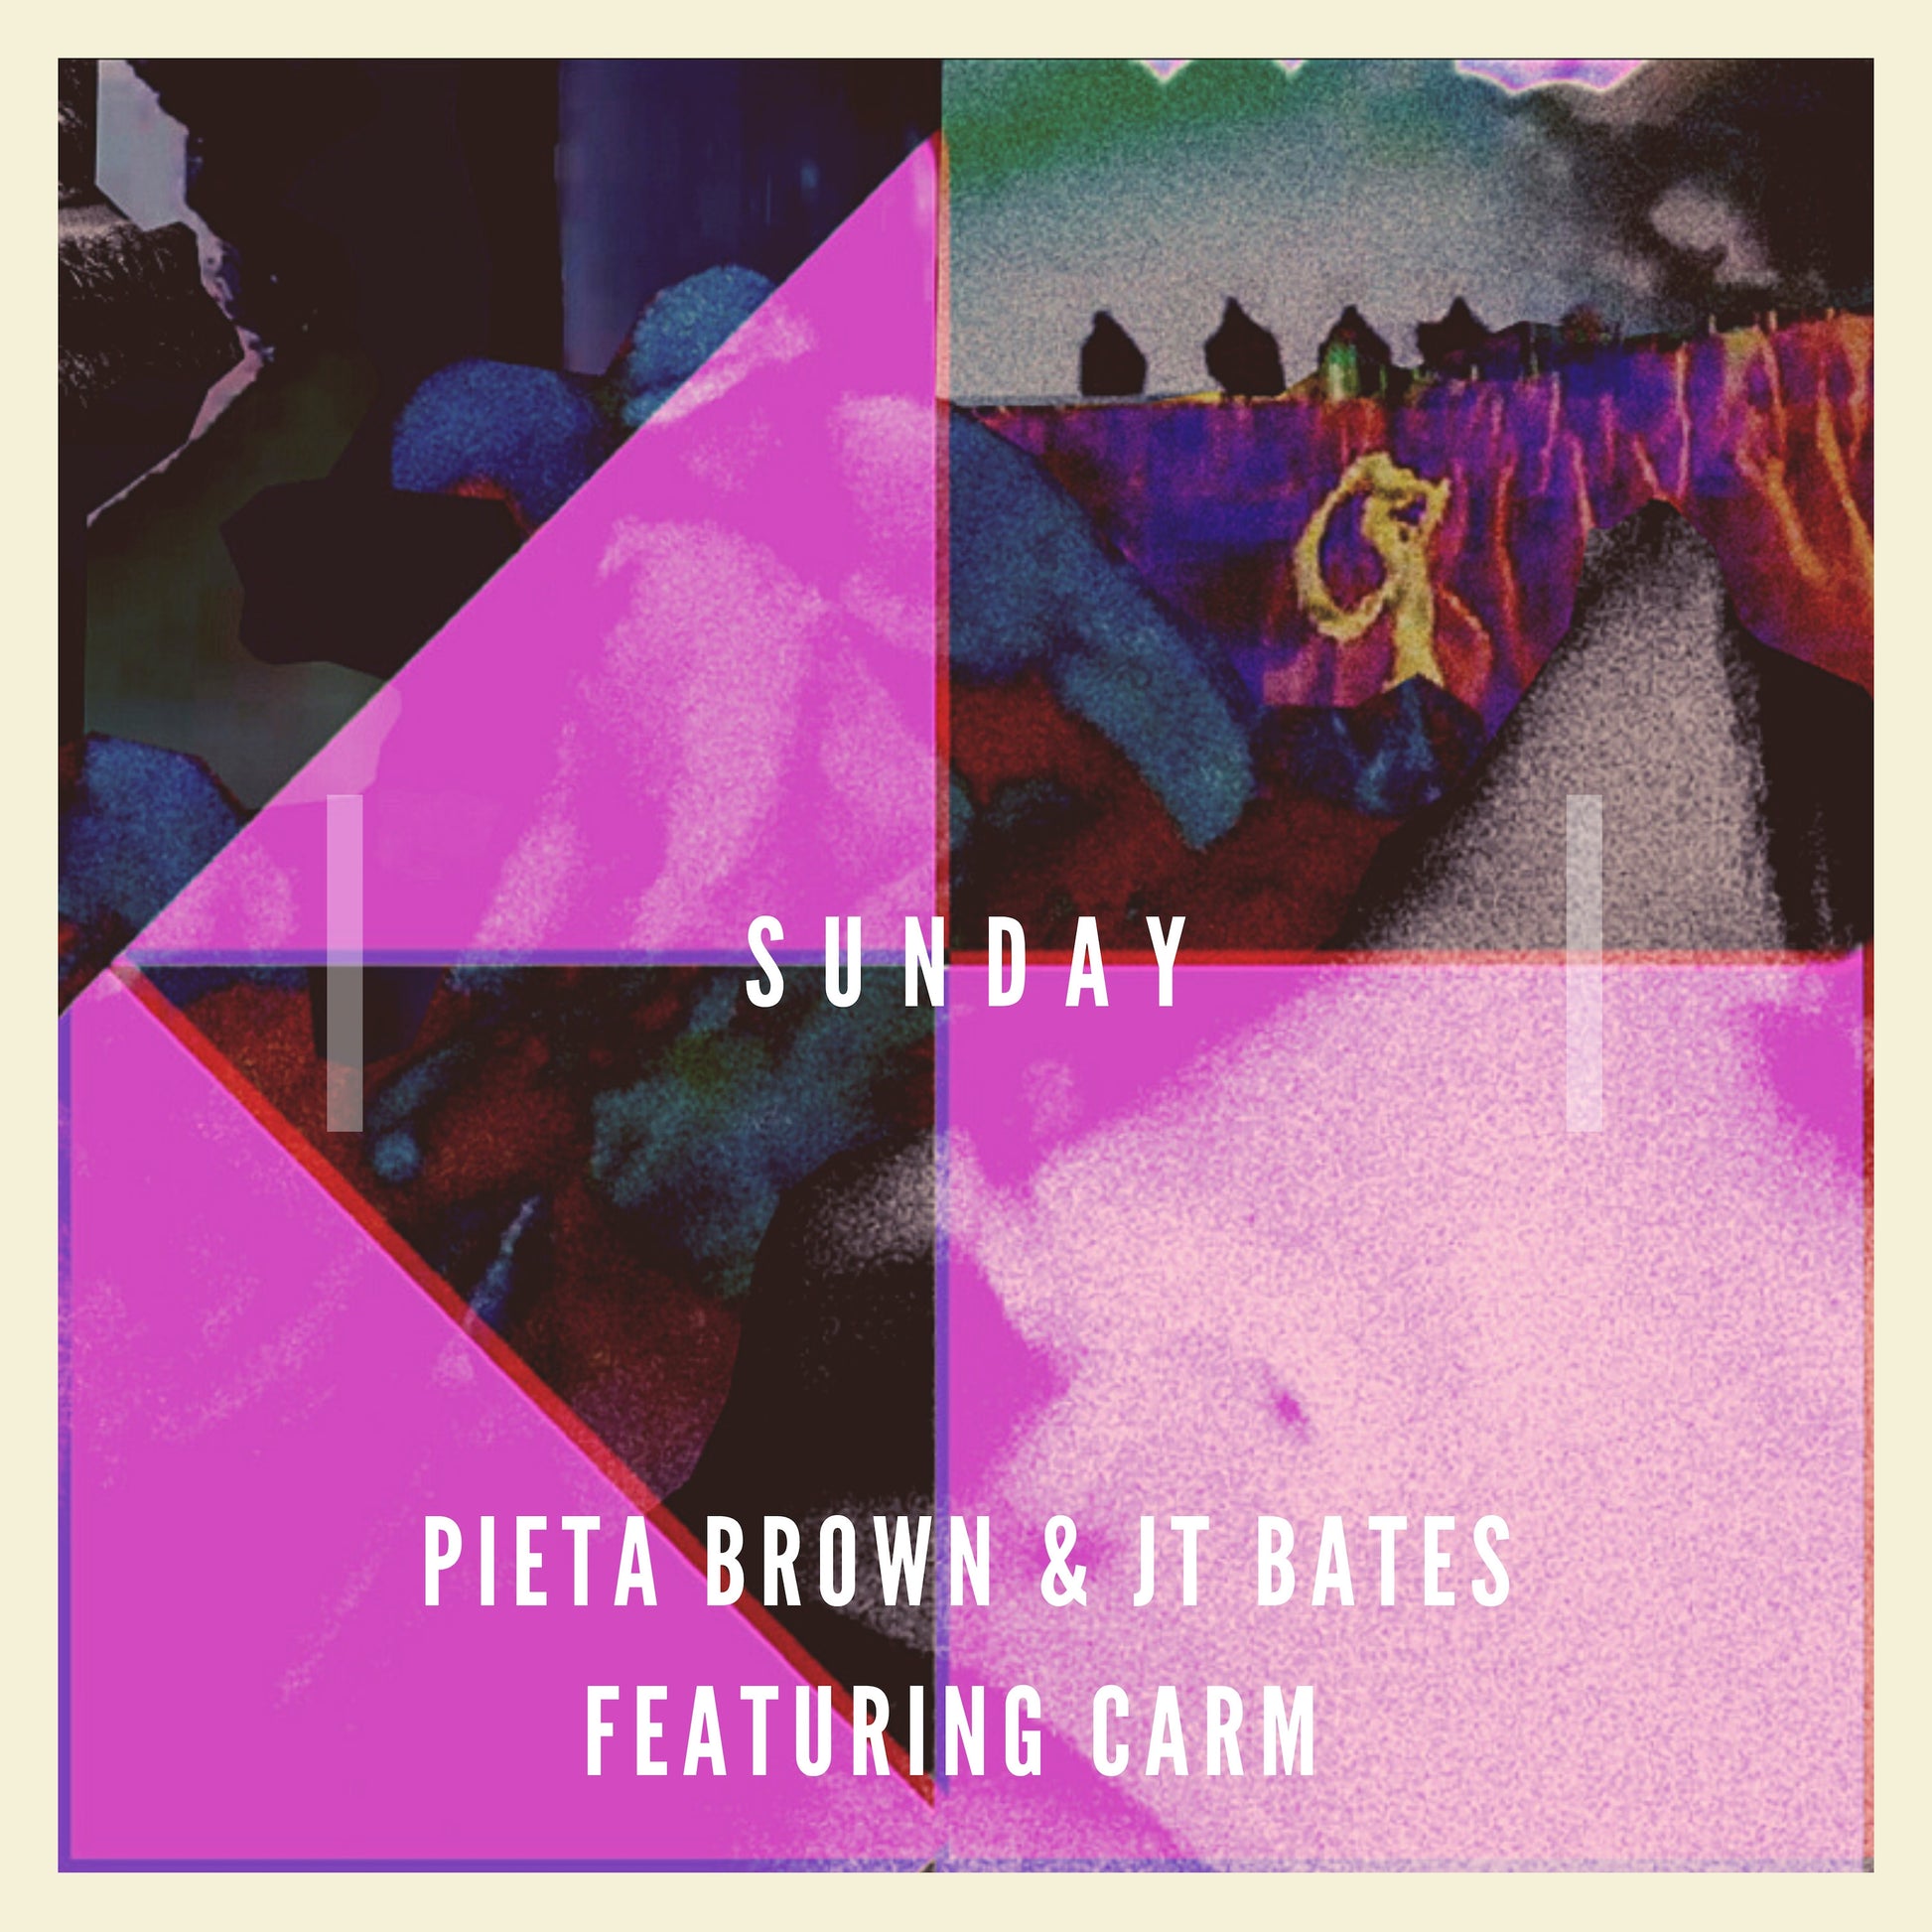 Pieta Brown & JT Bates (feat. CARM) - Sunday (Single)